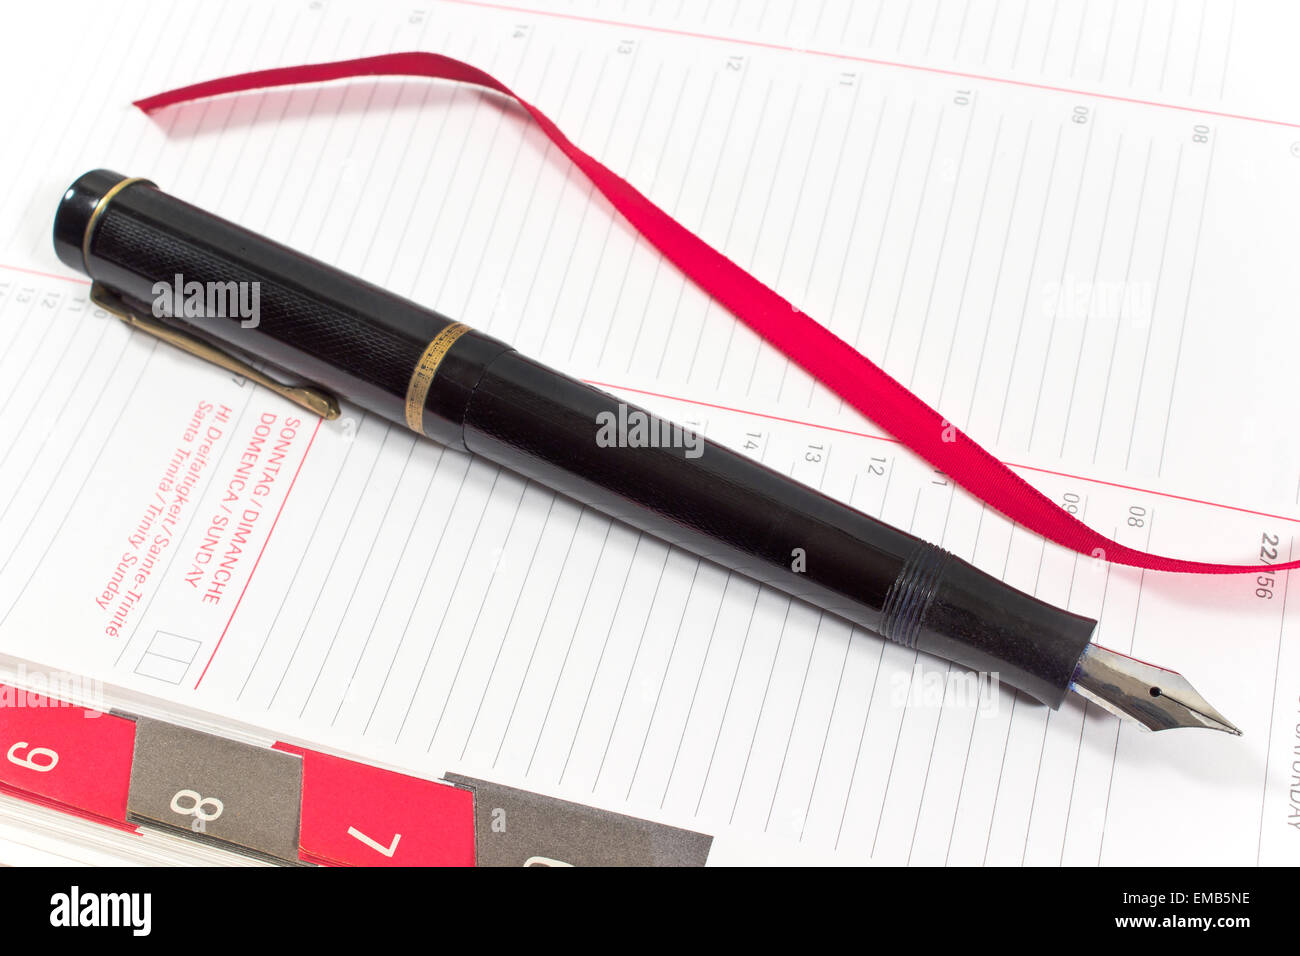 Fountain pen on personal organizer Stock Photo